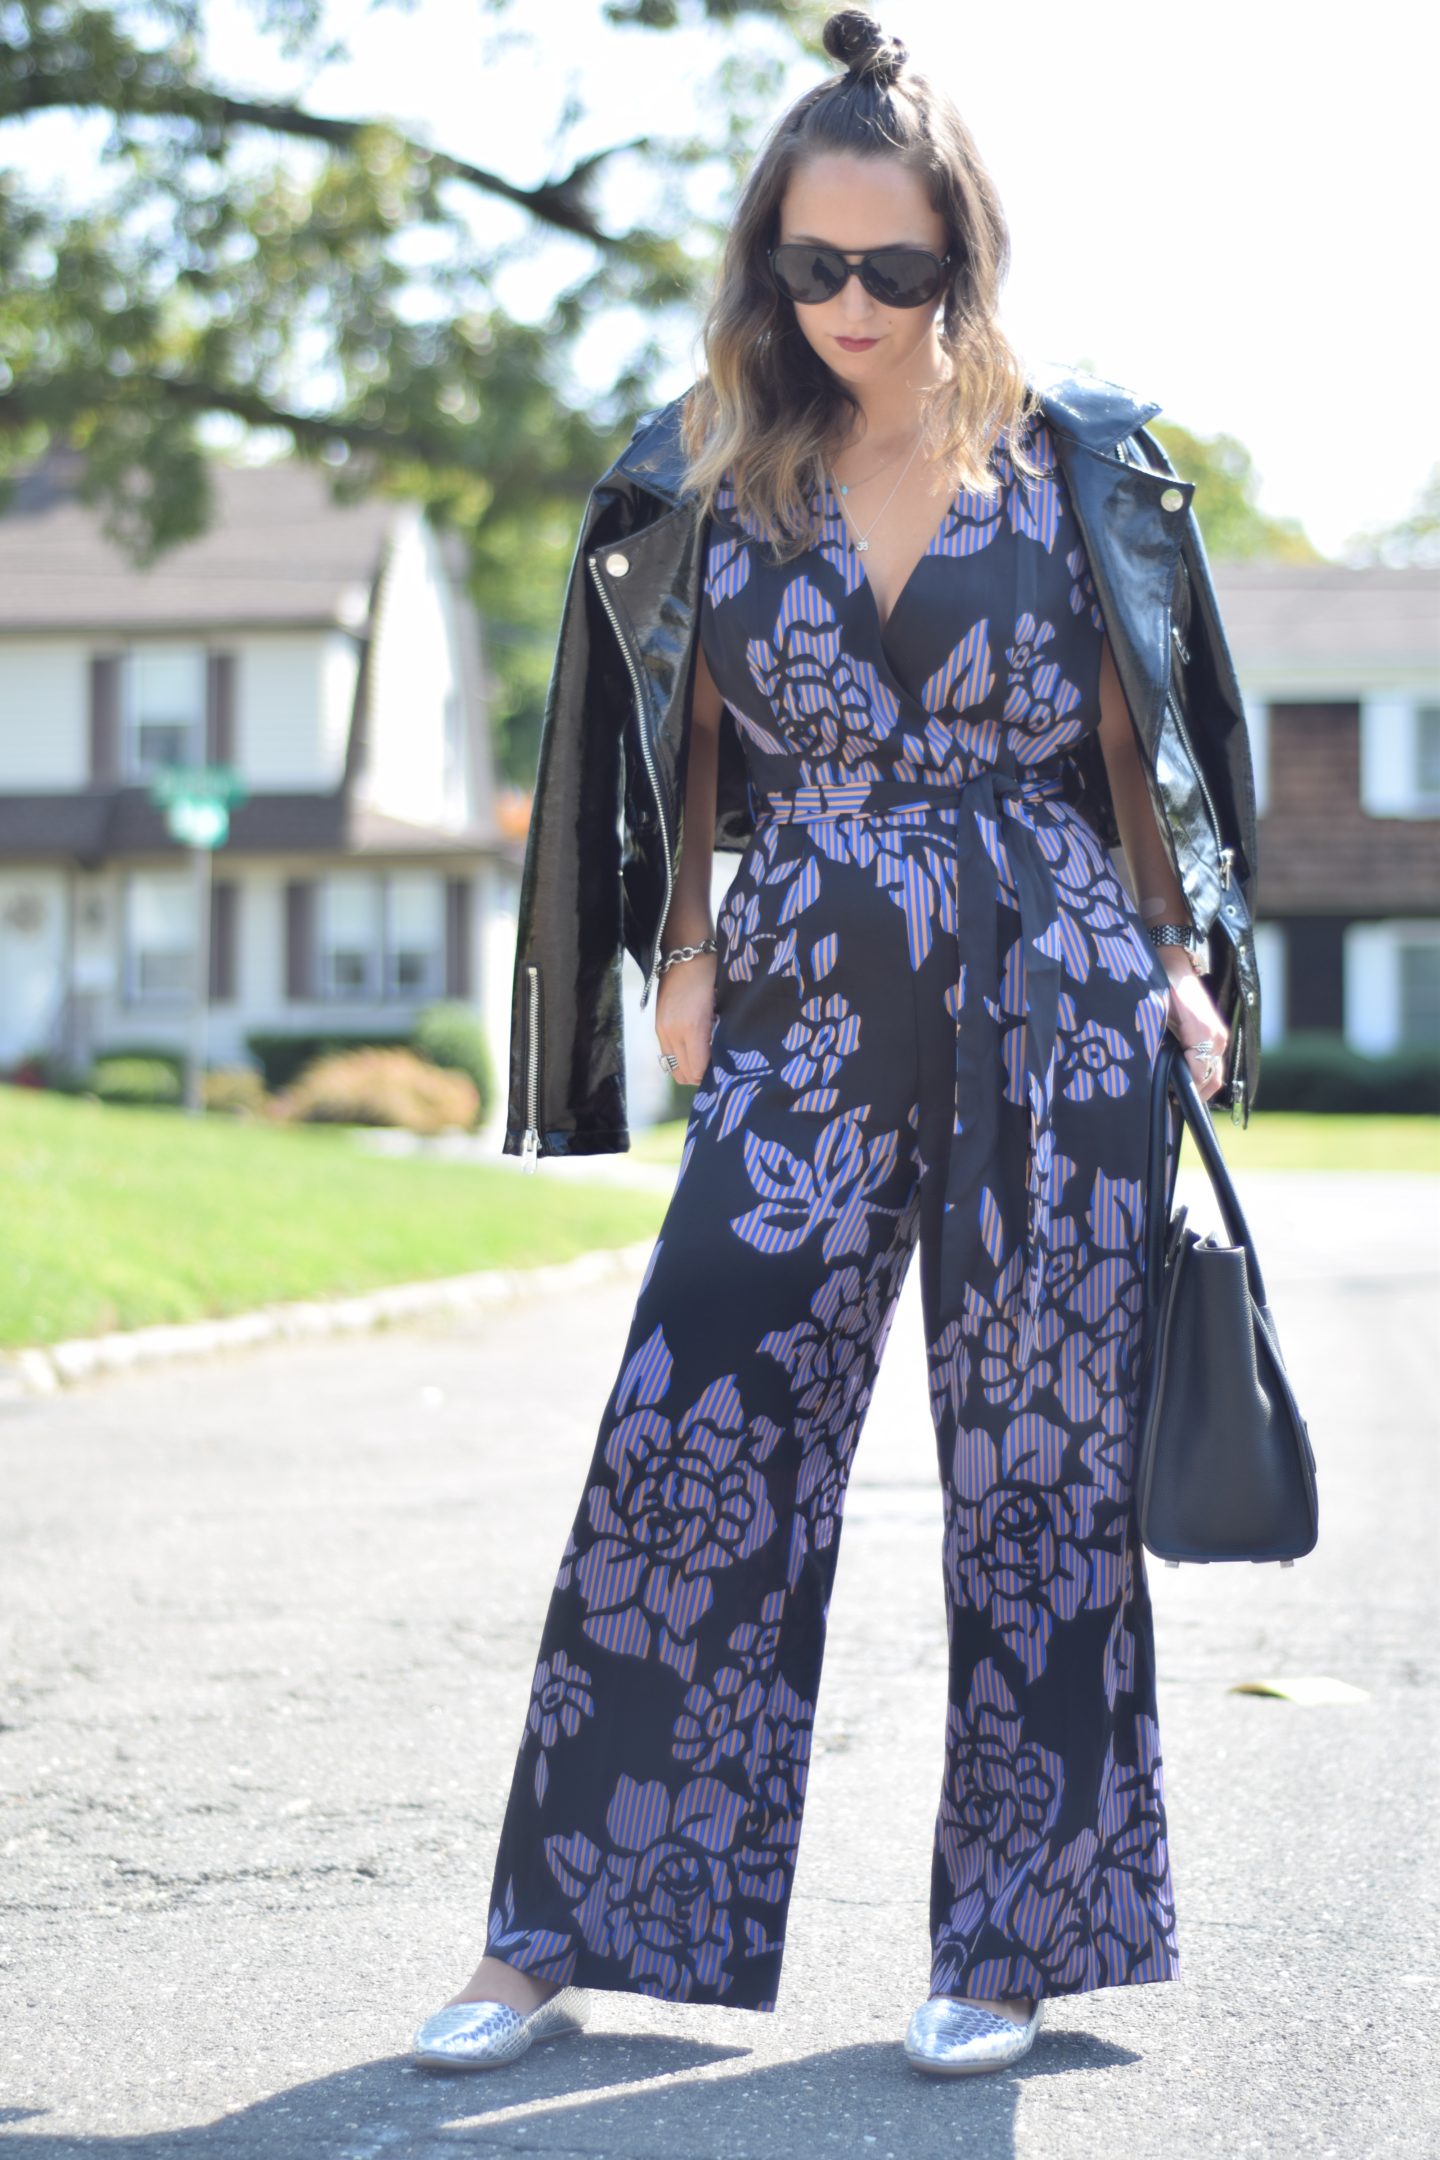 Yosi samra-outfit-style-NYFW-blogger